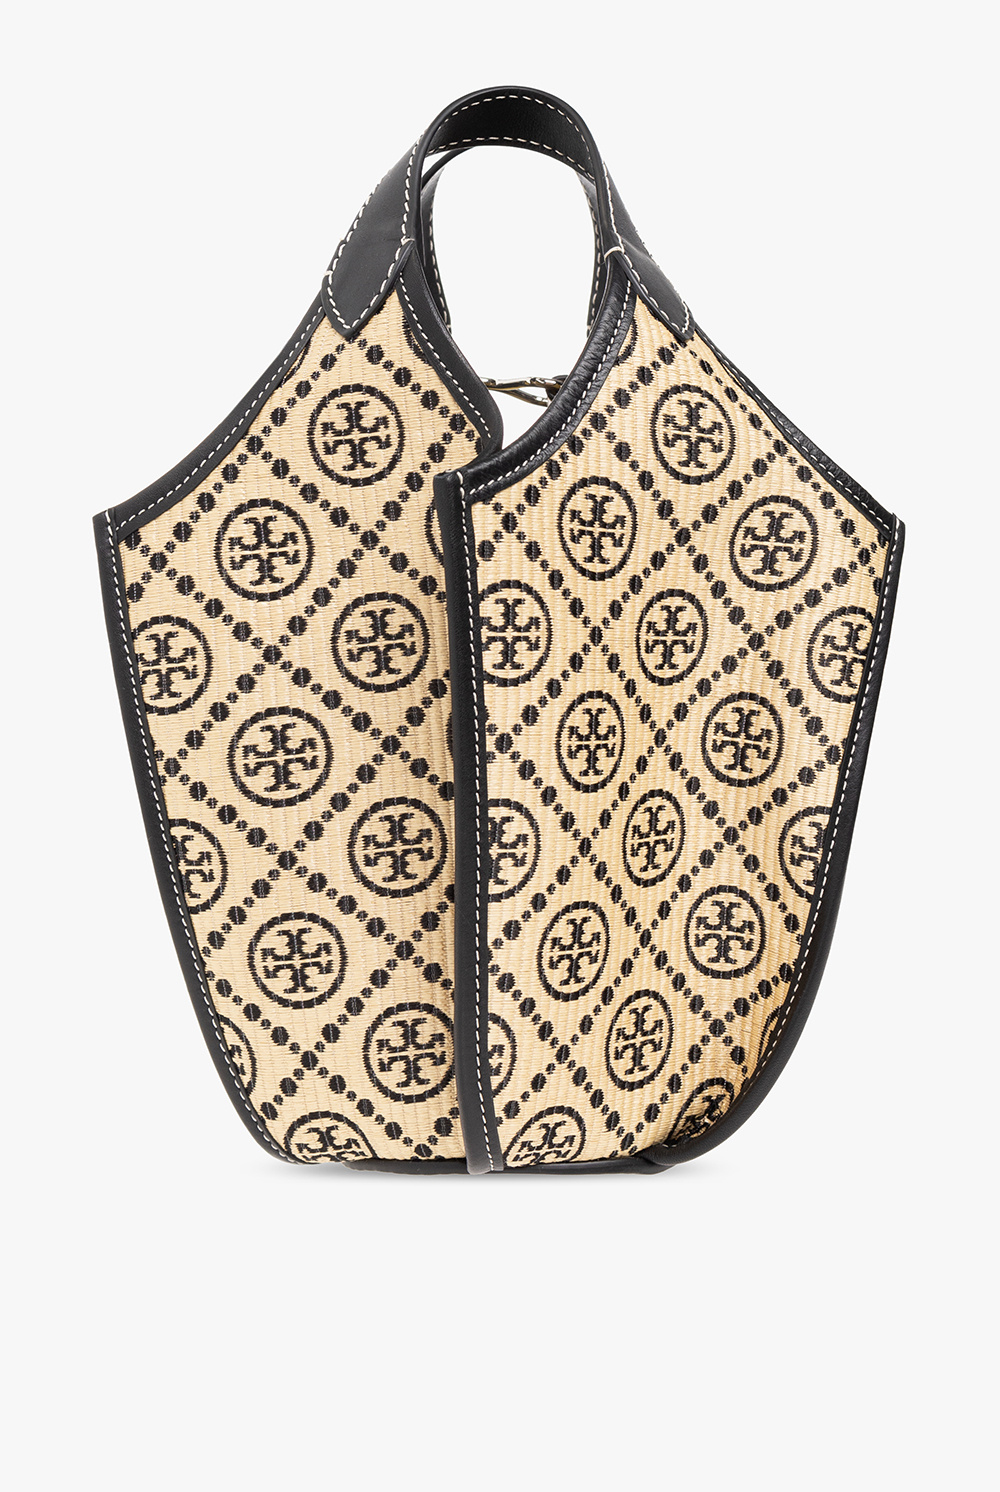 Tory Burch ‘Lampshade’ handbag with logo